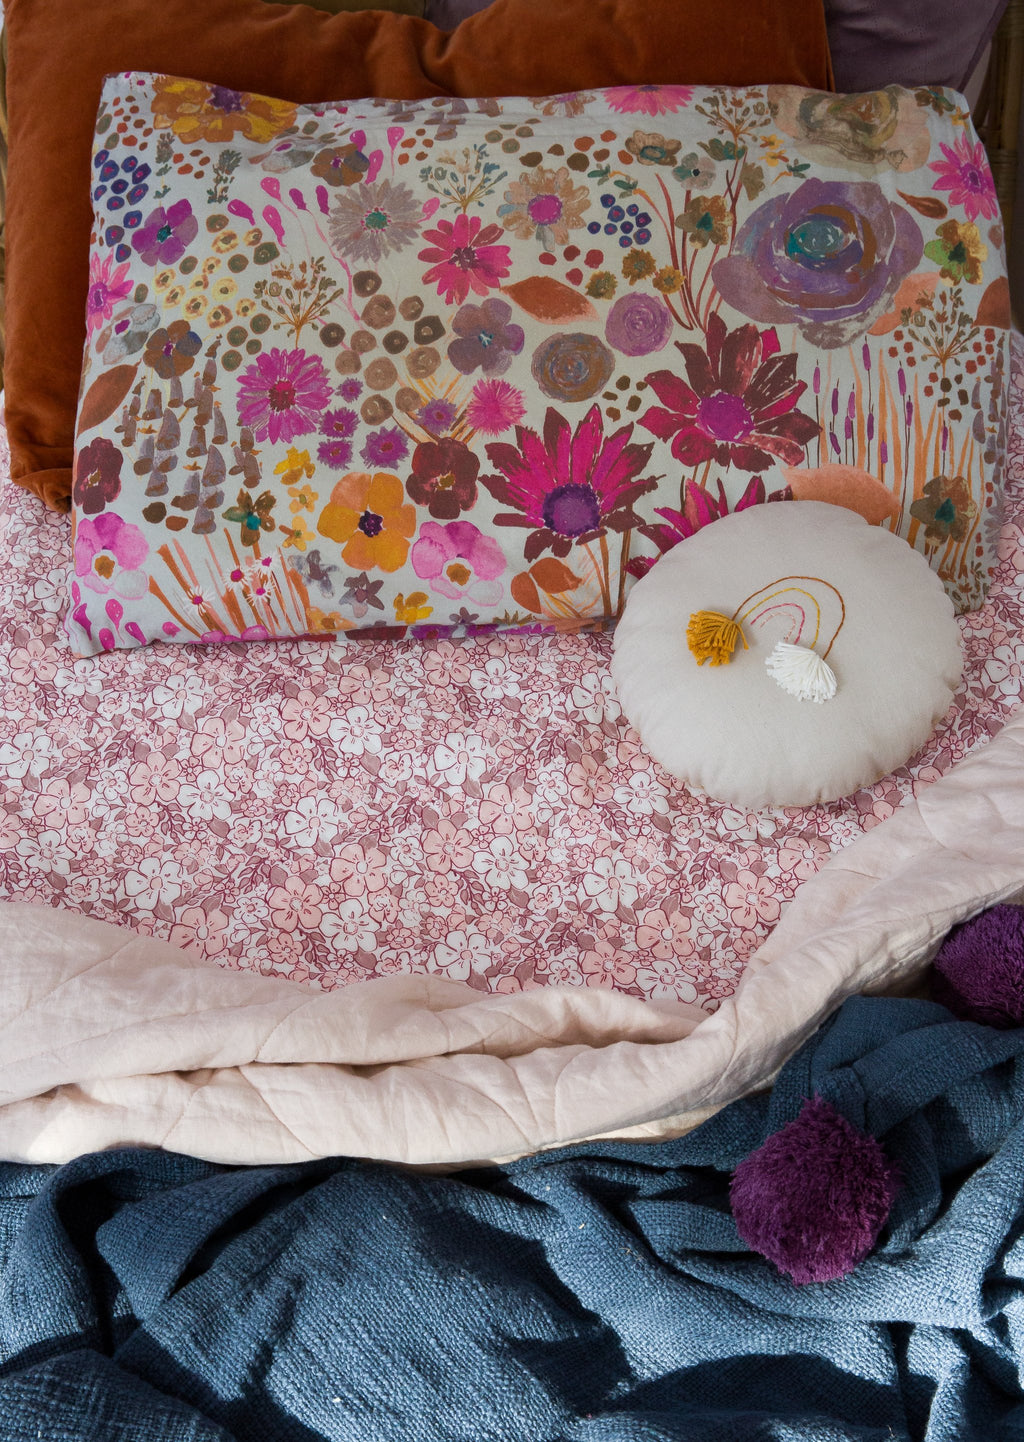 Bed Mate - Waterproof Sheet Protector WITH WINGS - Vintage Florals